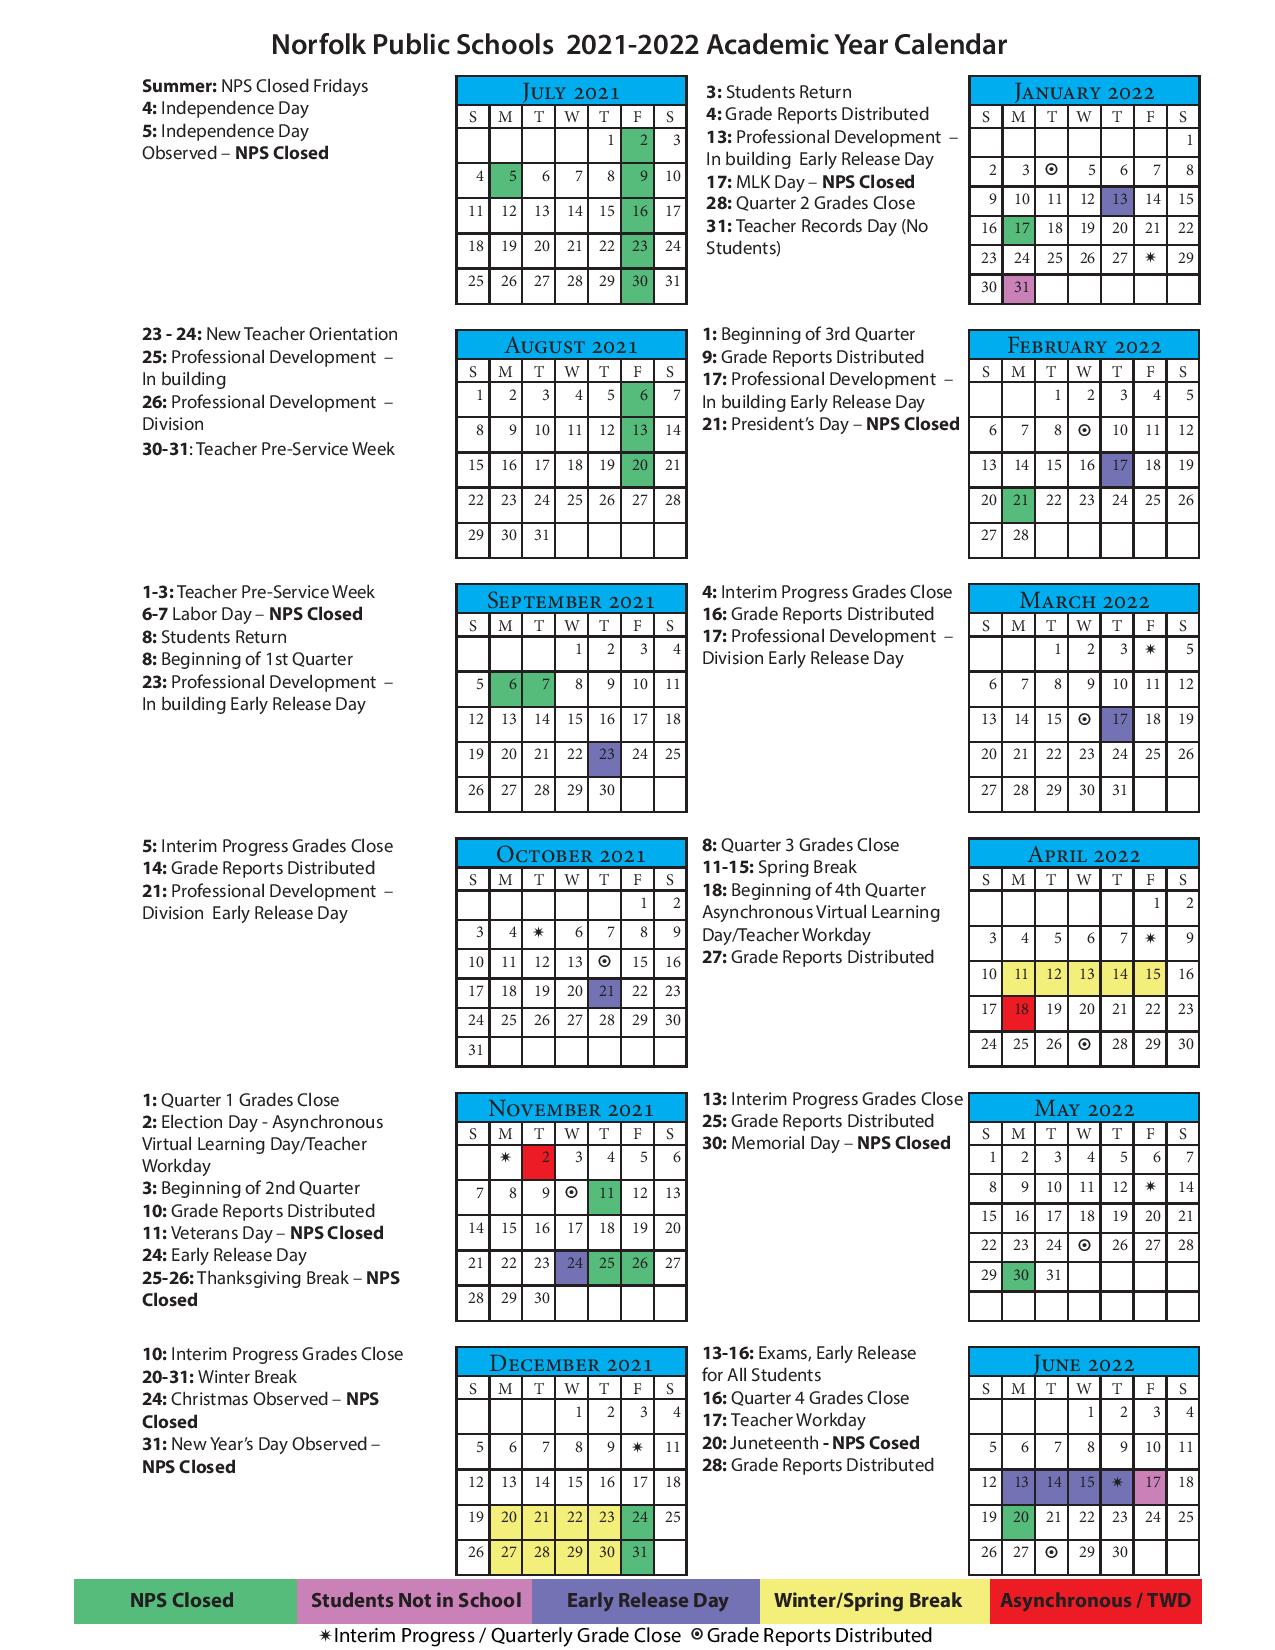 Norfolk Public Schools Calendar 2021 2022 in PDF